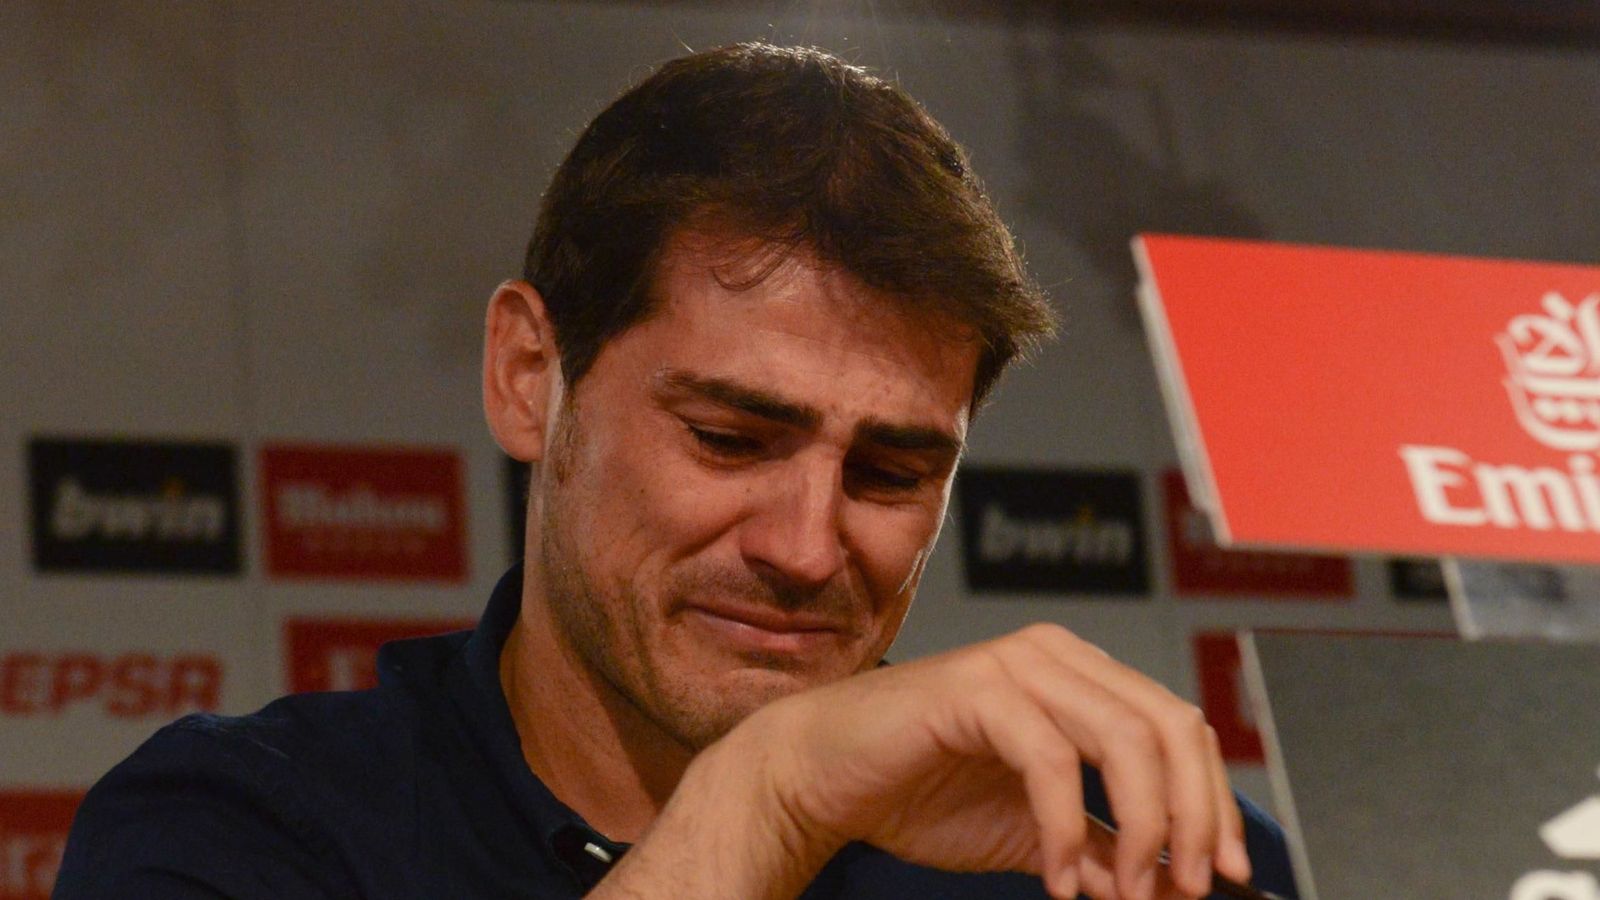 Foto: Iker Casillas llora durante su despedida del Real Madrid. (Cordon Press).